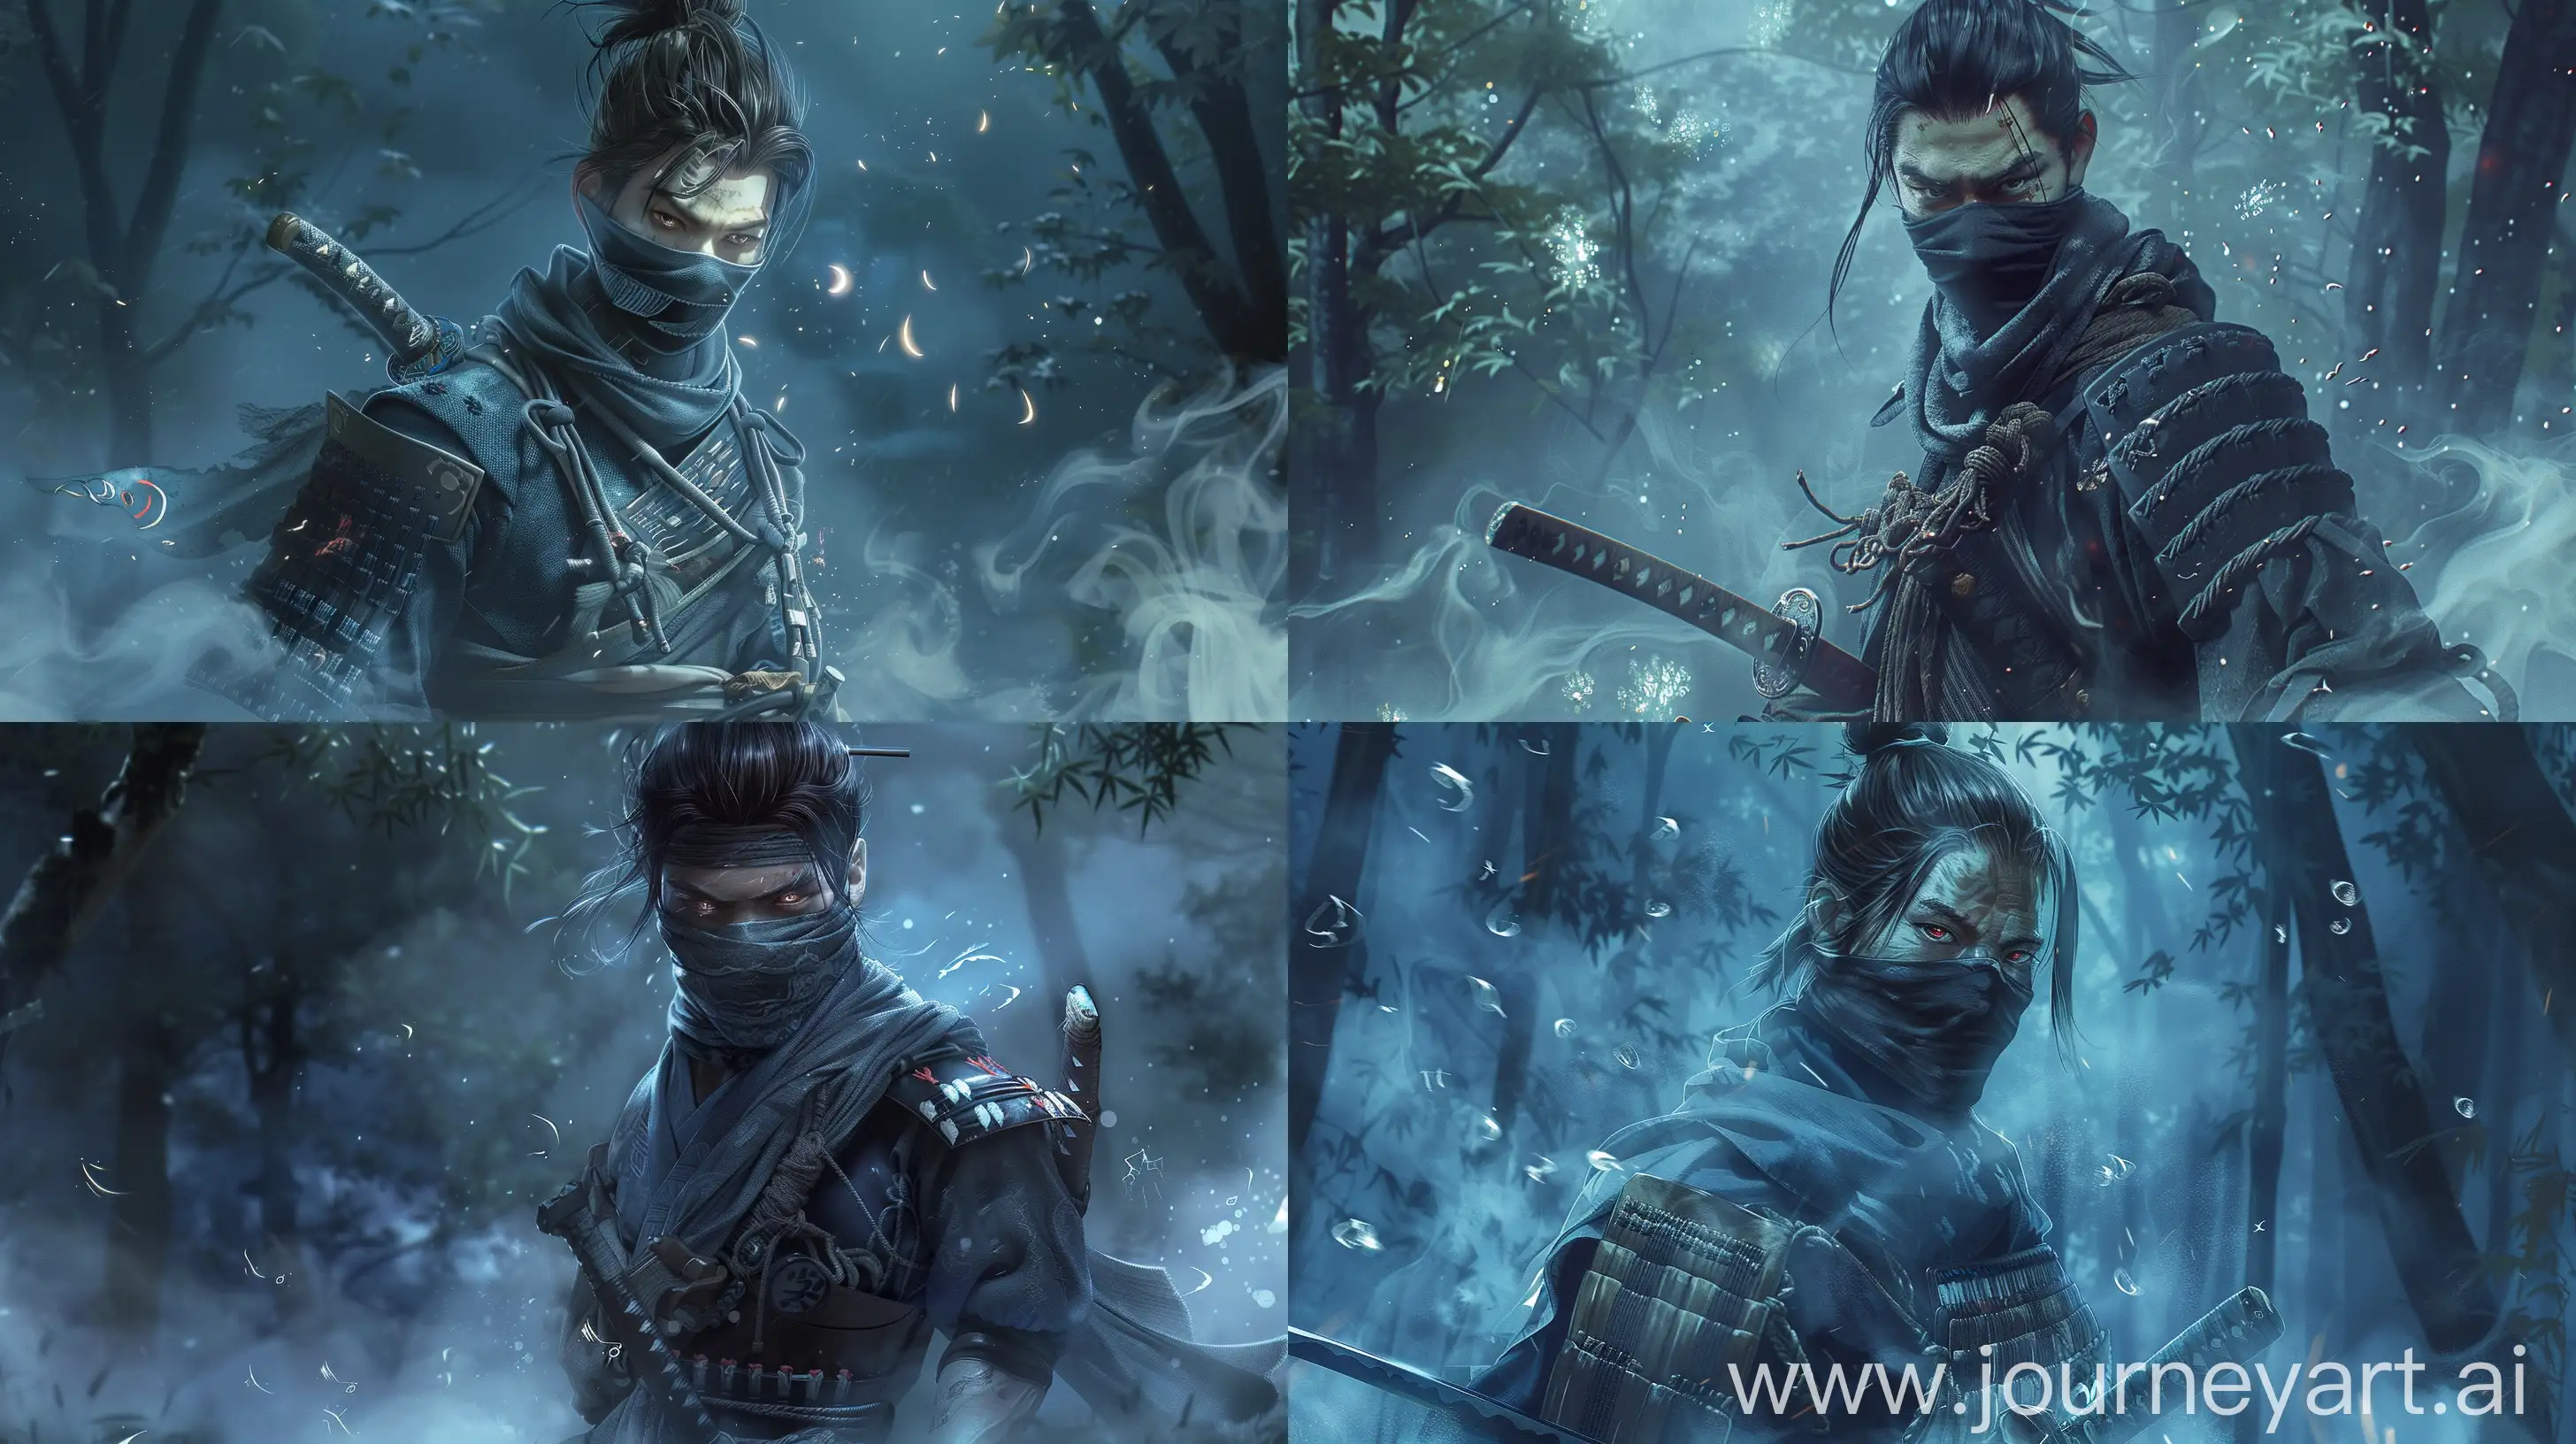 Enigmatic-Ninja-Warrior-Hattori-Hanzo-in-Moonlit-Forest